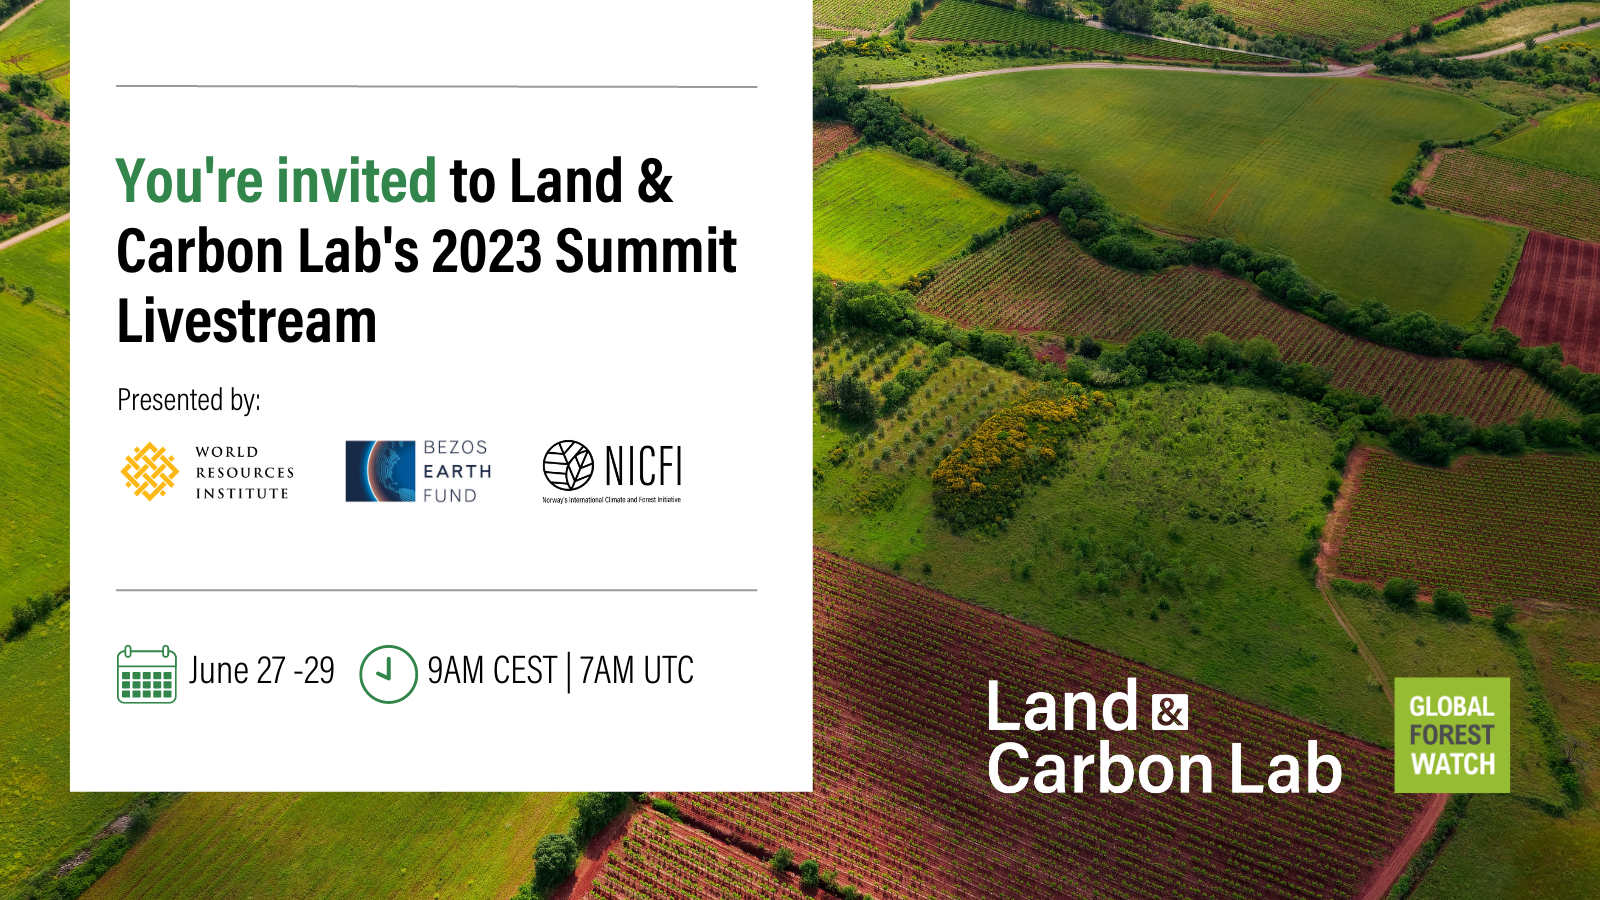 Land & Carbon Lab's 2023 Summit